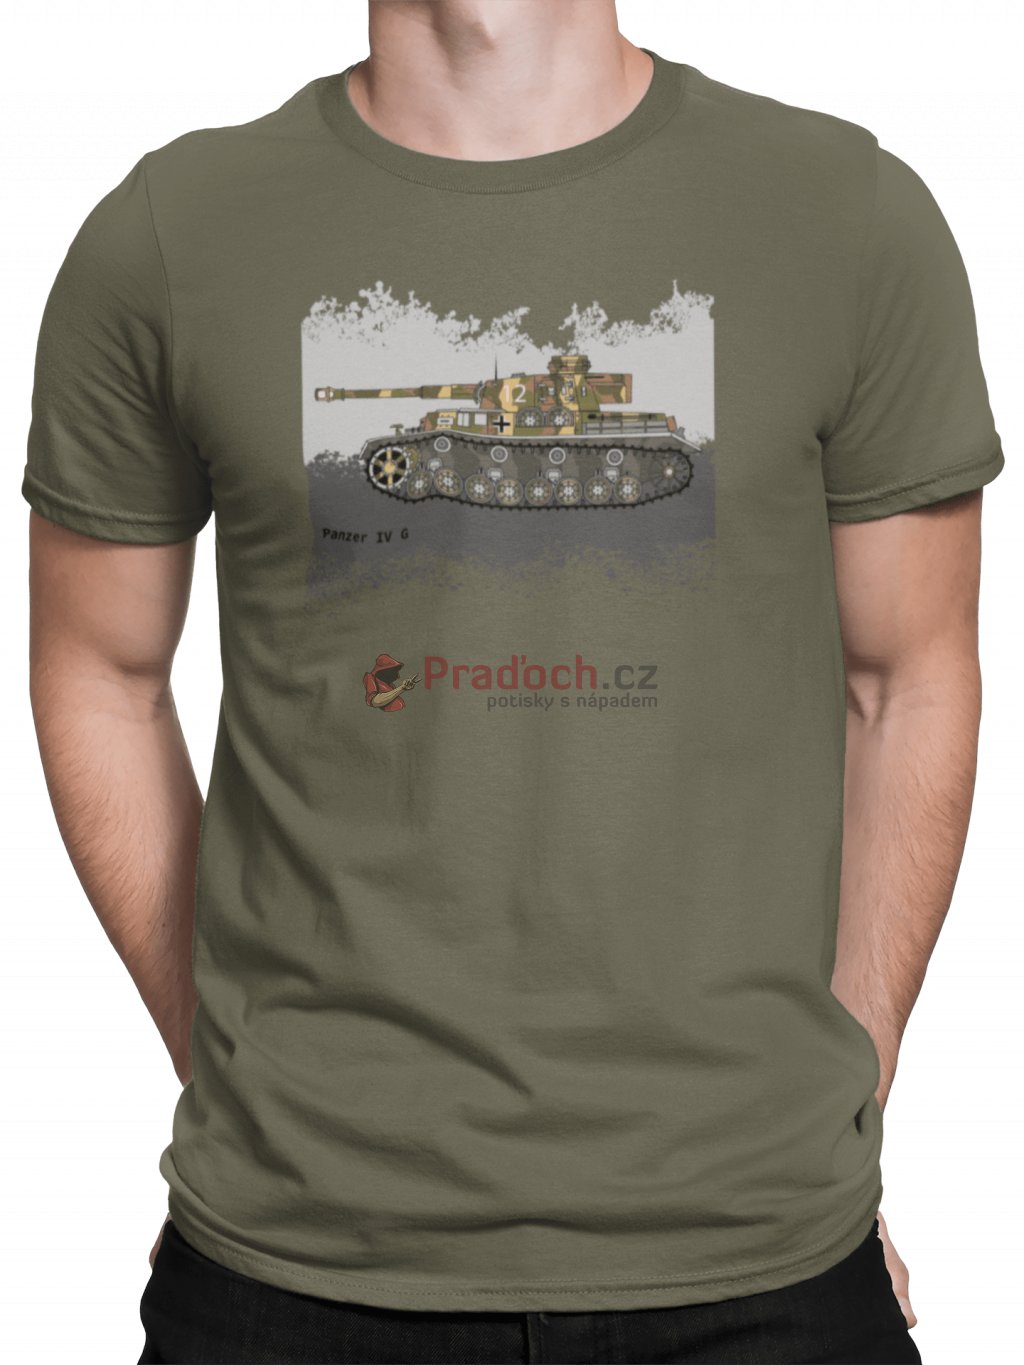 Tričko s potiskem Panzer IV G